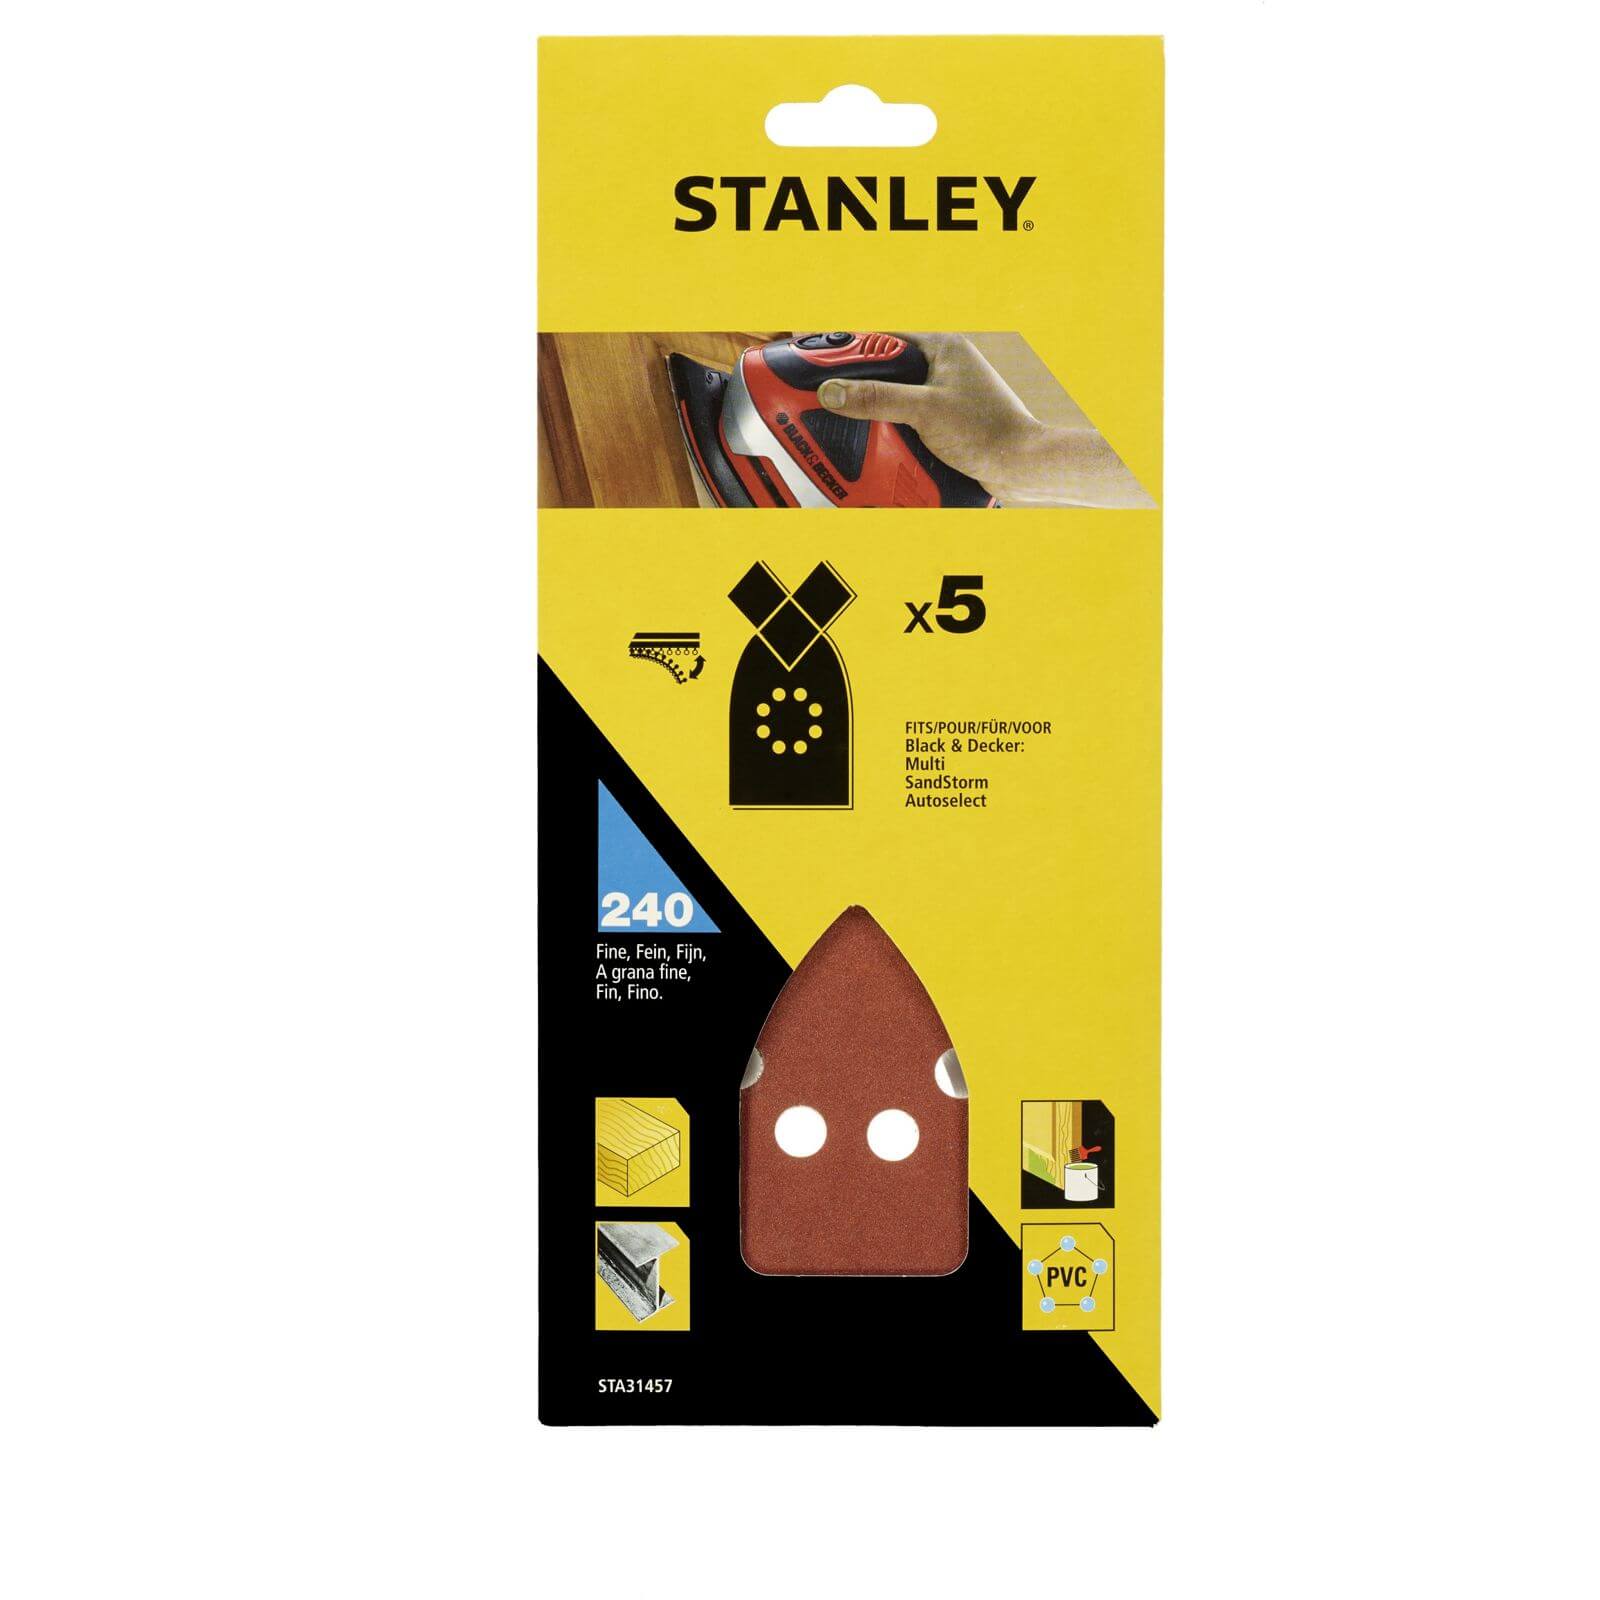 Photo of Stanley Sanding Sheets - 240g - Sta31457-xj